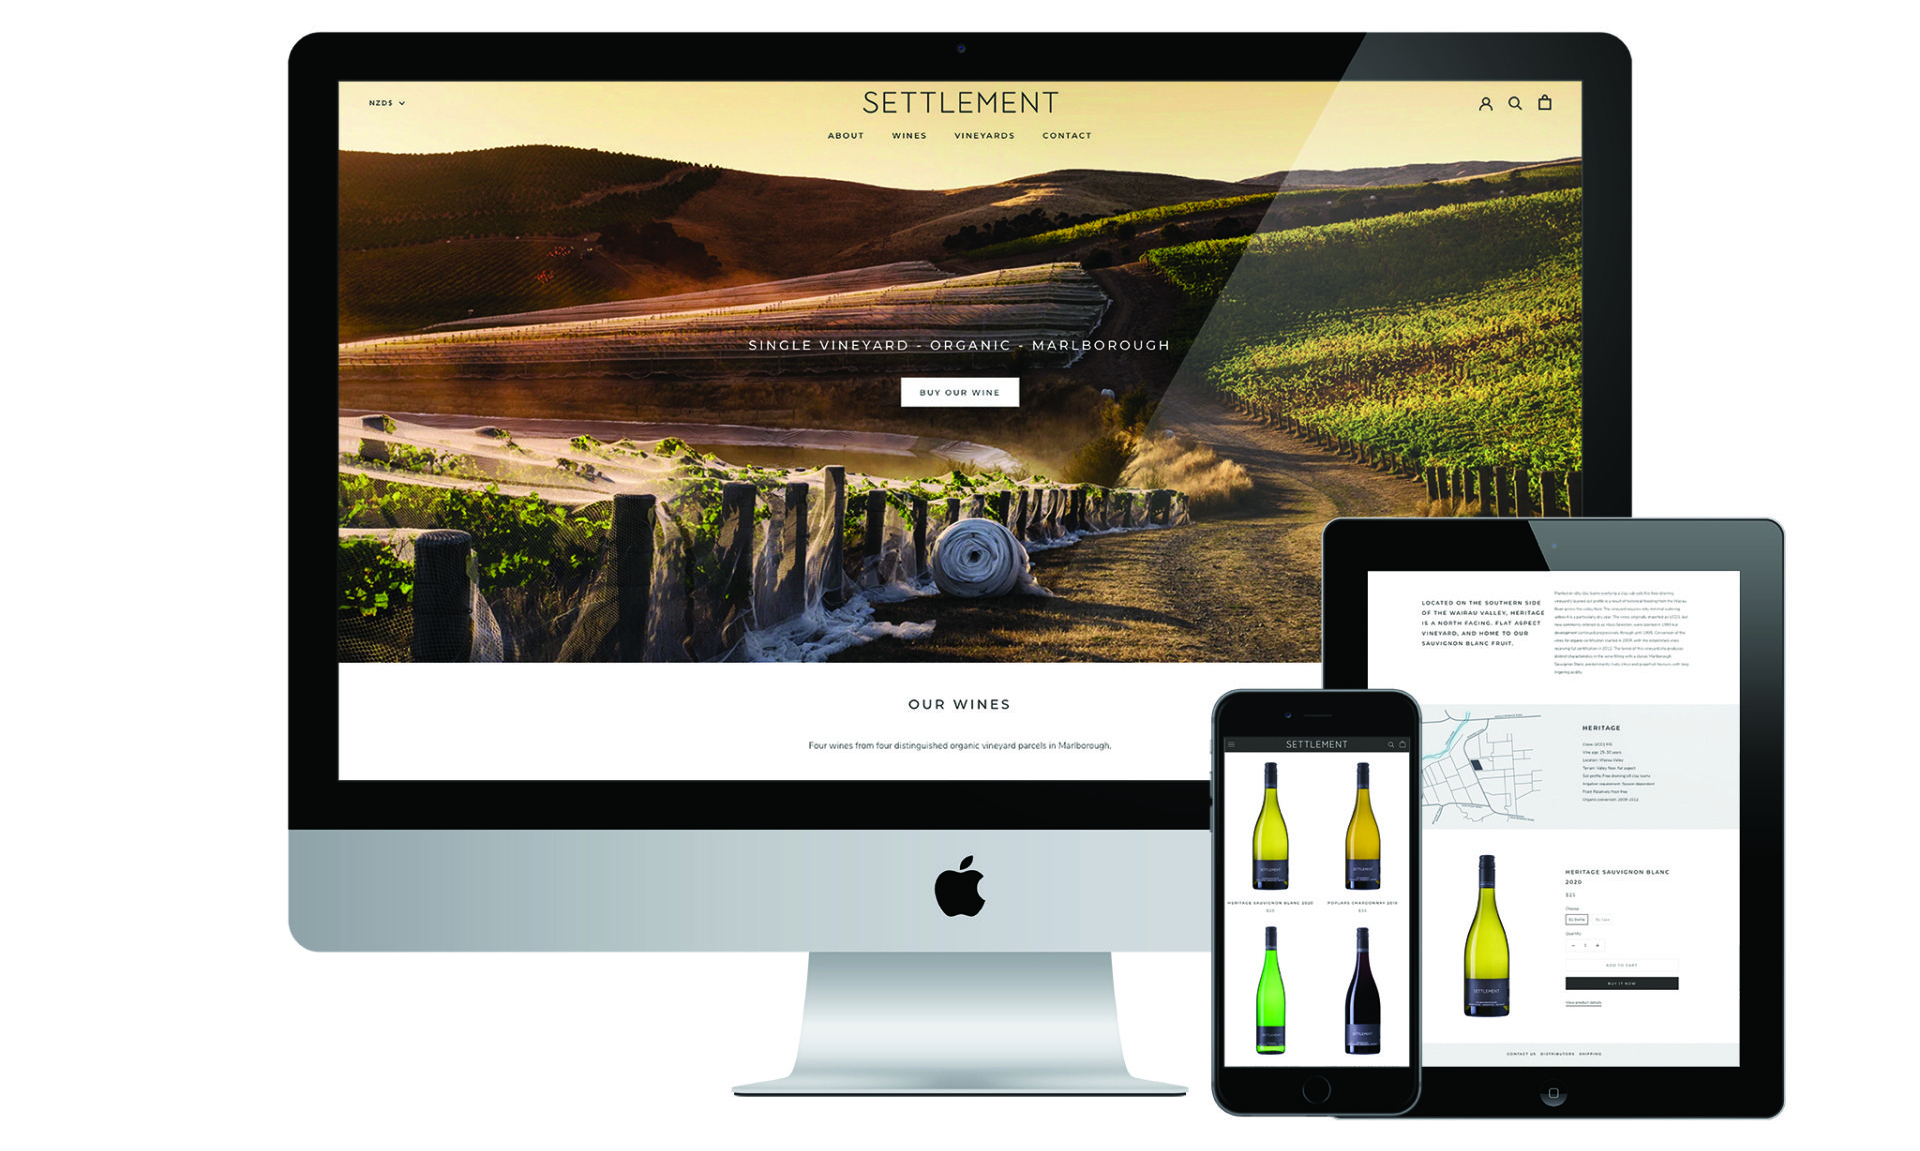 Settlement Wines website designed by Vanilla Hayes creative graphic design  studio in Blenheim, Marlborough, New Zealand